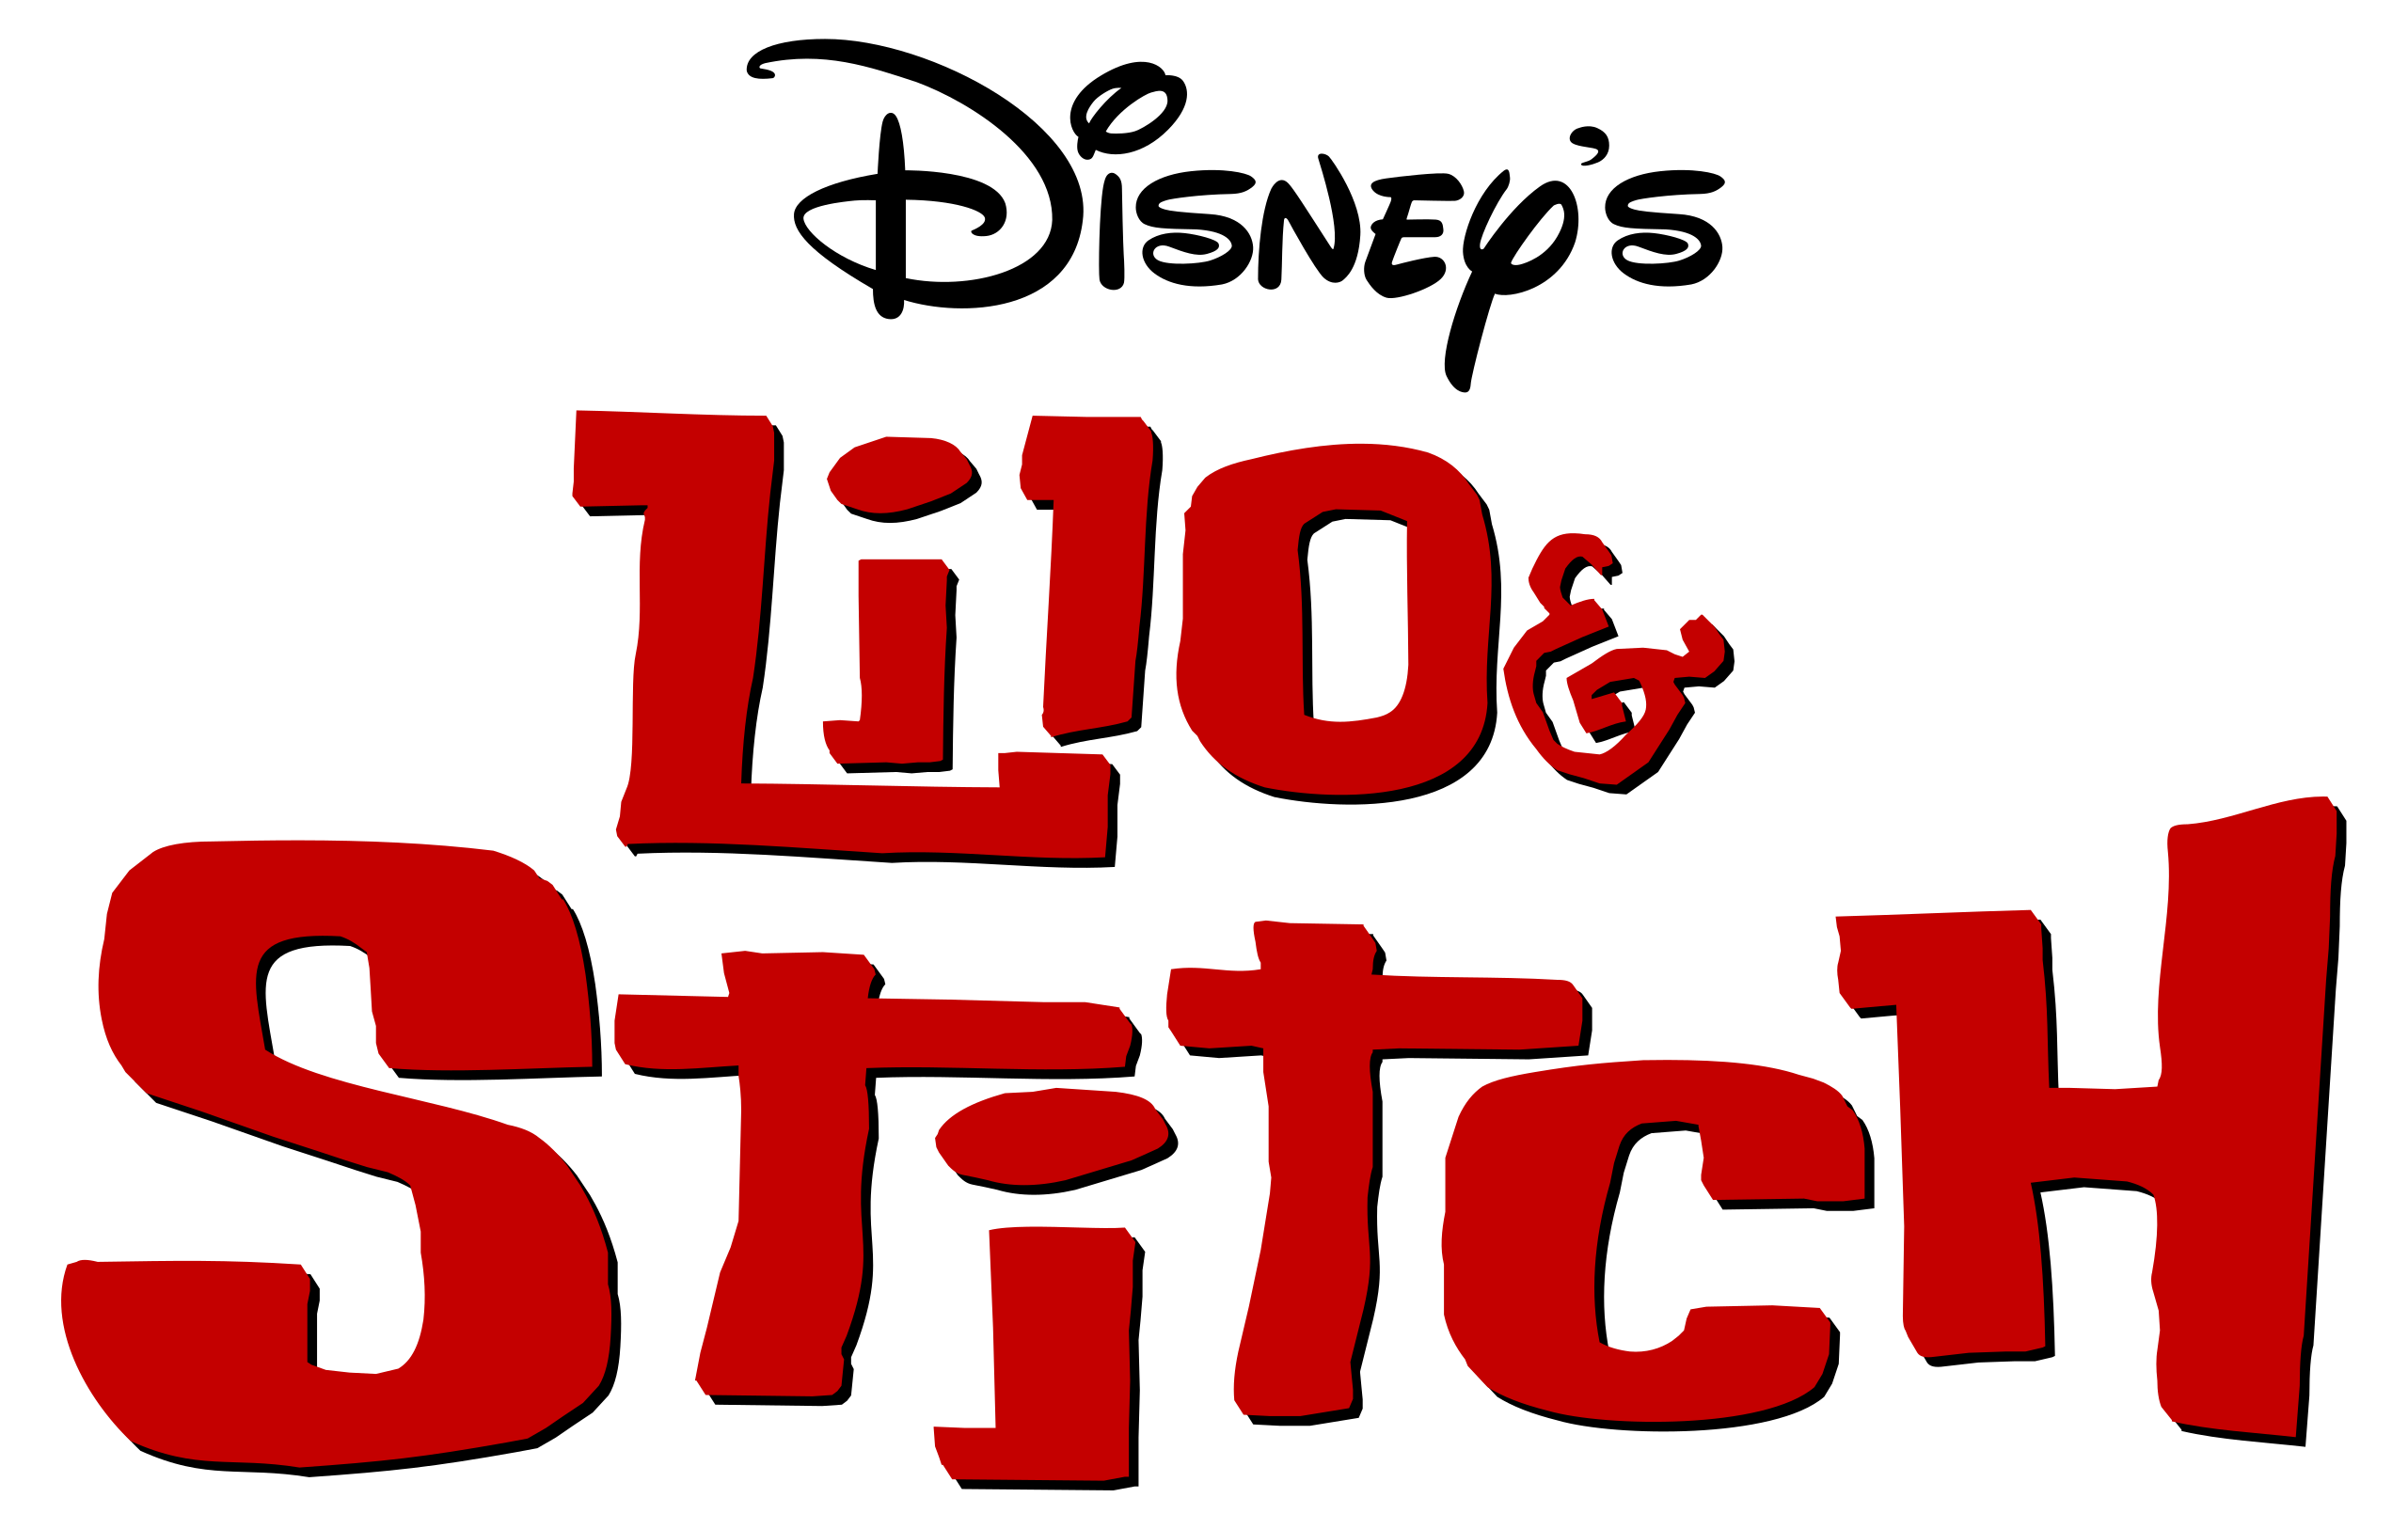 lilo and stitch logo transparent